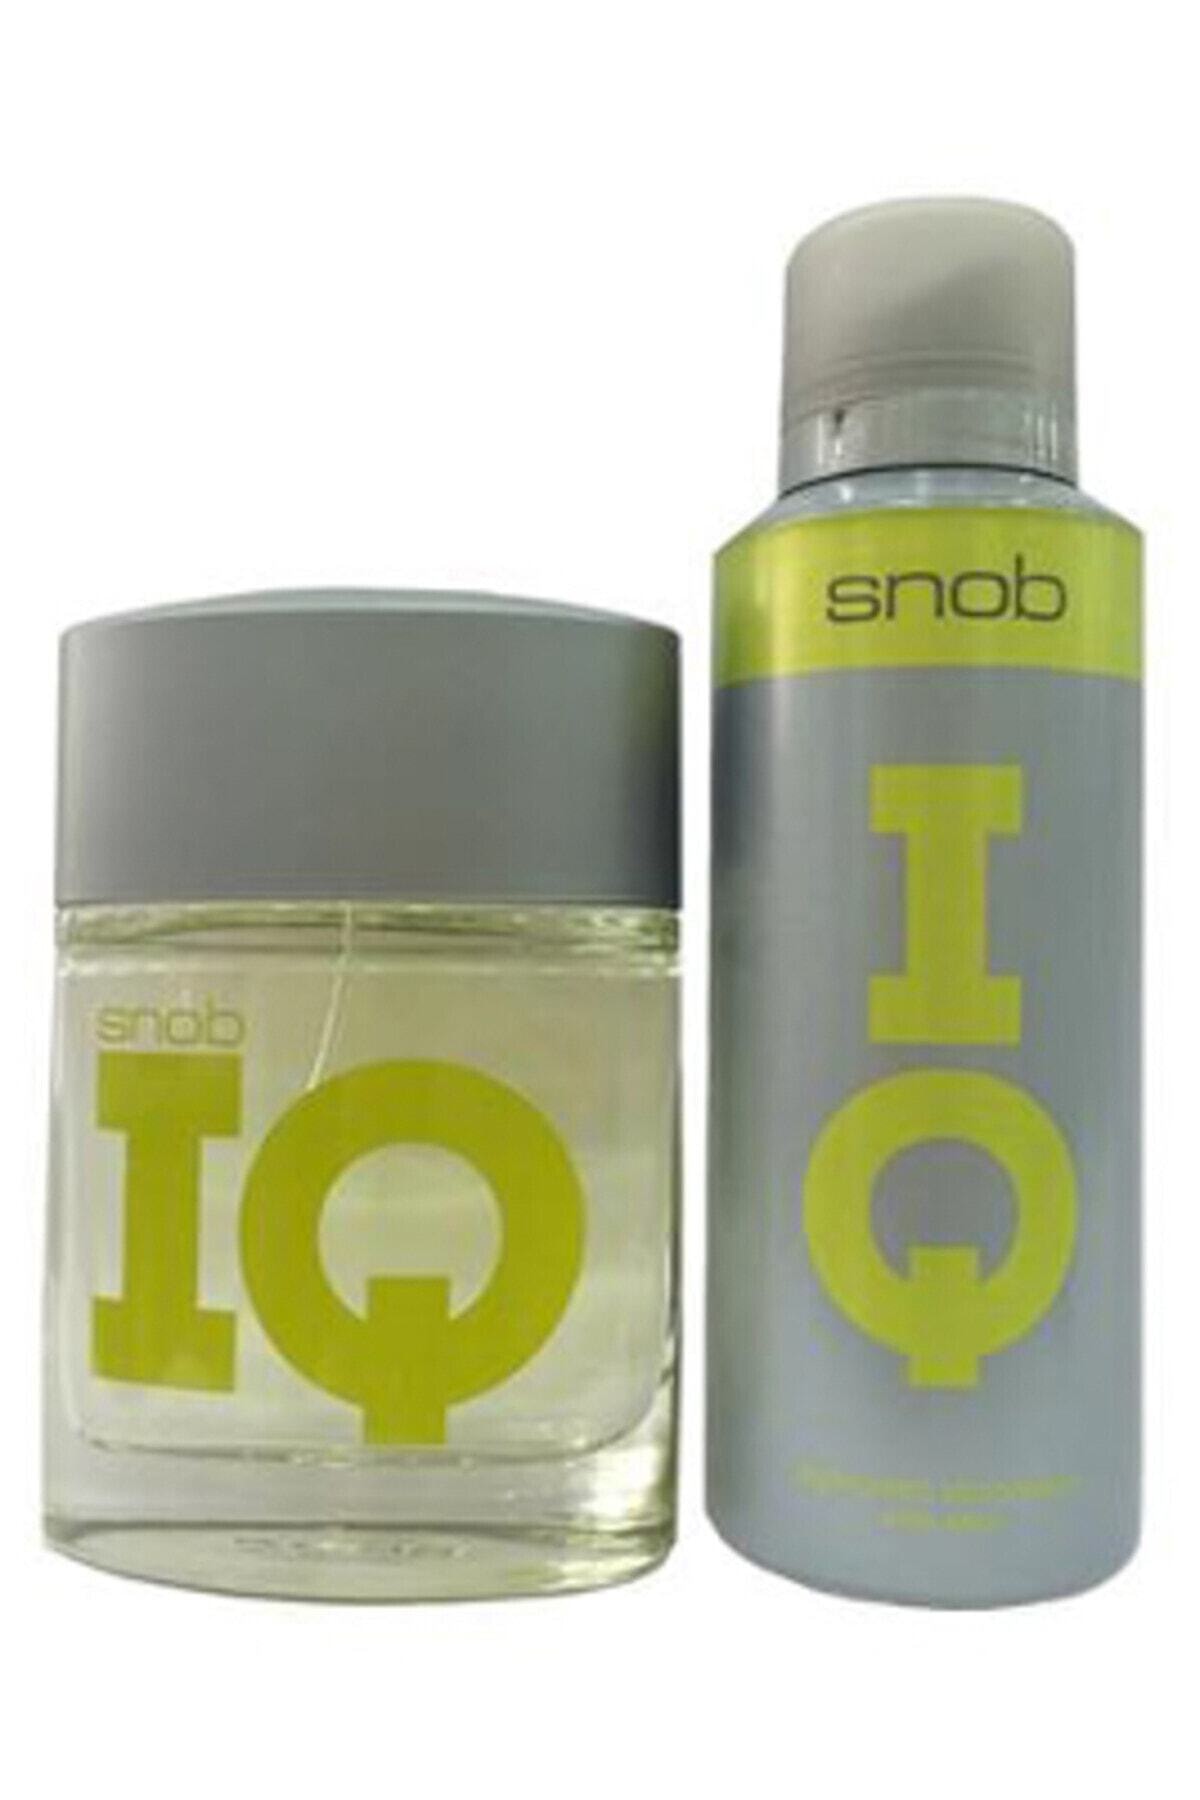 Snob IQ Edt 100 ml + 150 ml Deodorant Erkek Parfüm Seti 8690644012235